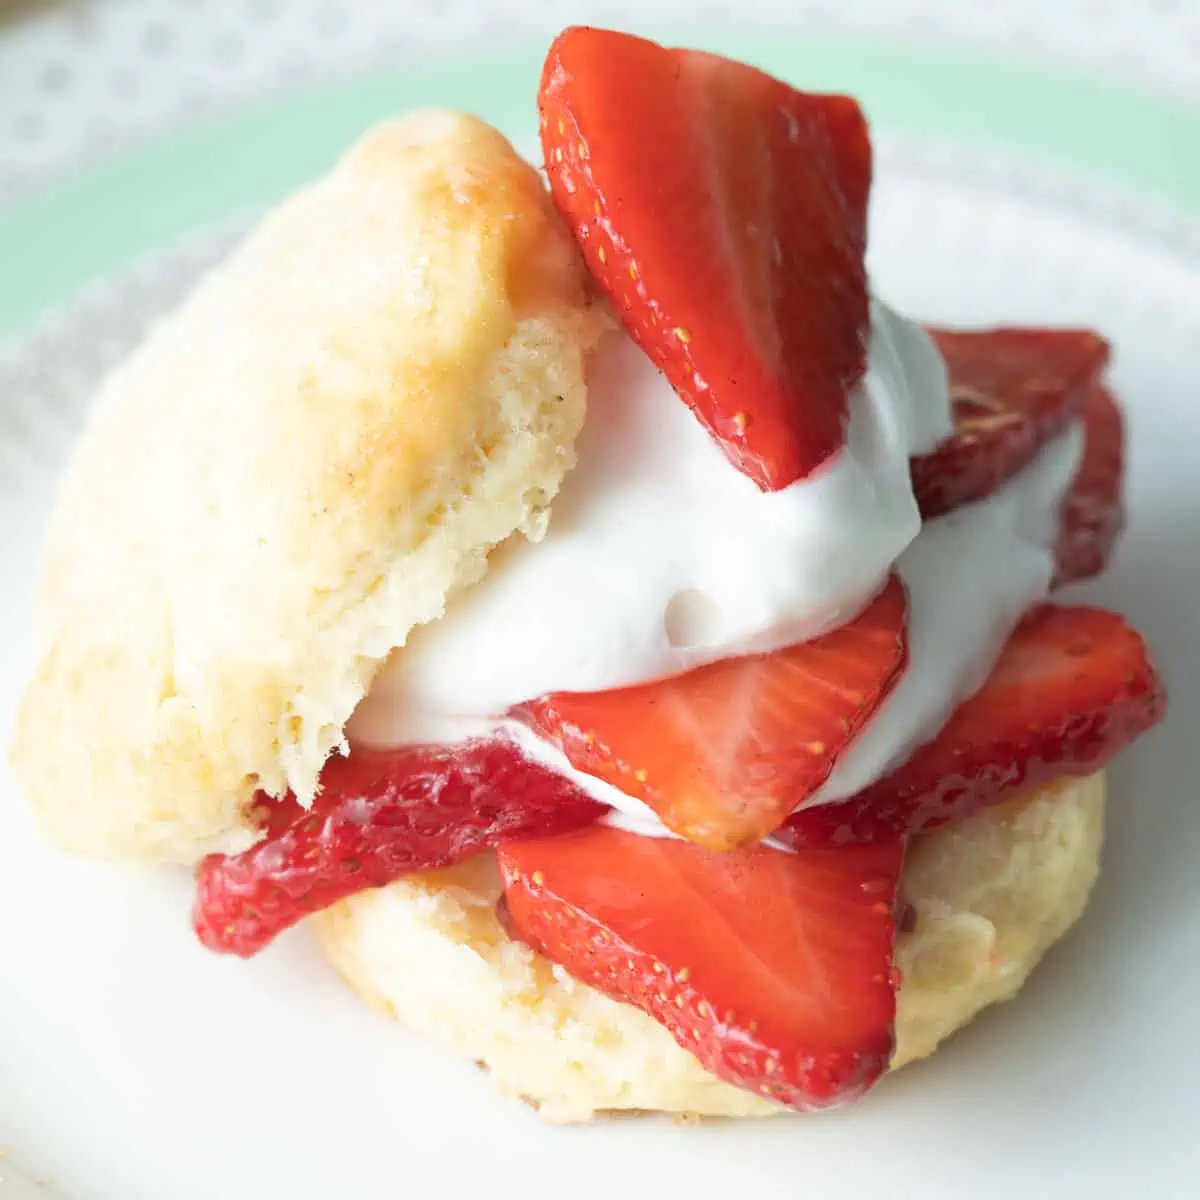 Vegan strawberry shortcake with vegan biscuits, fresh cut strawberries, and creamy whipped cream.
